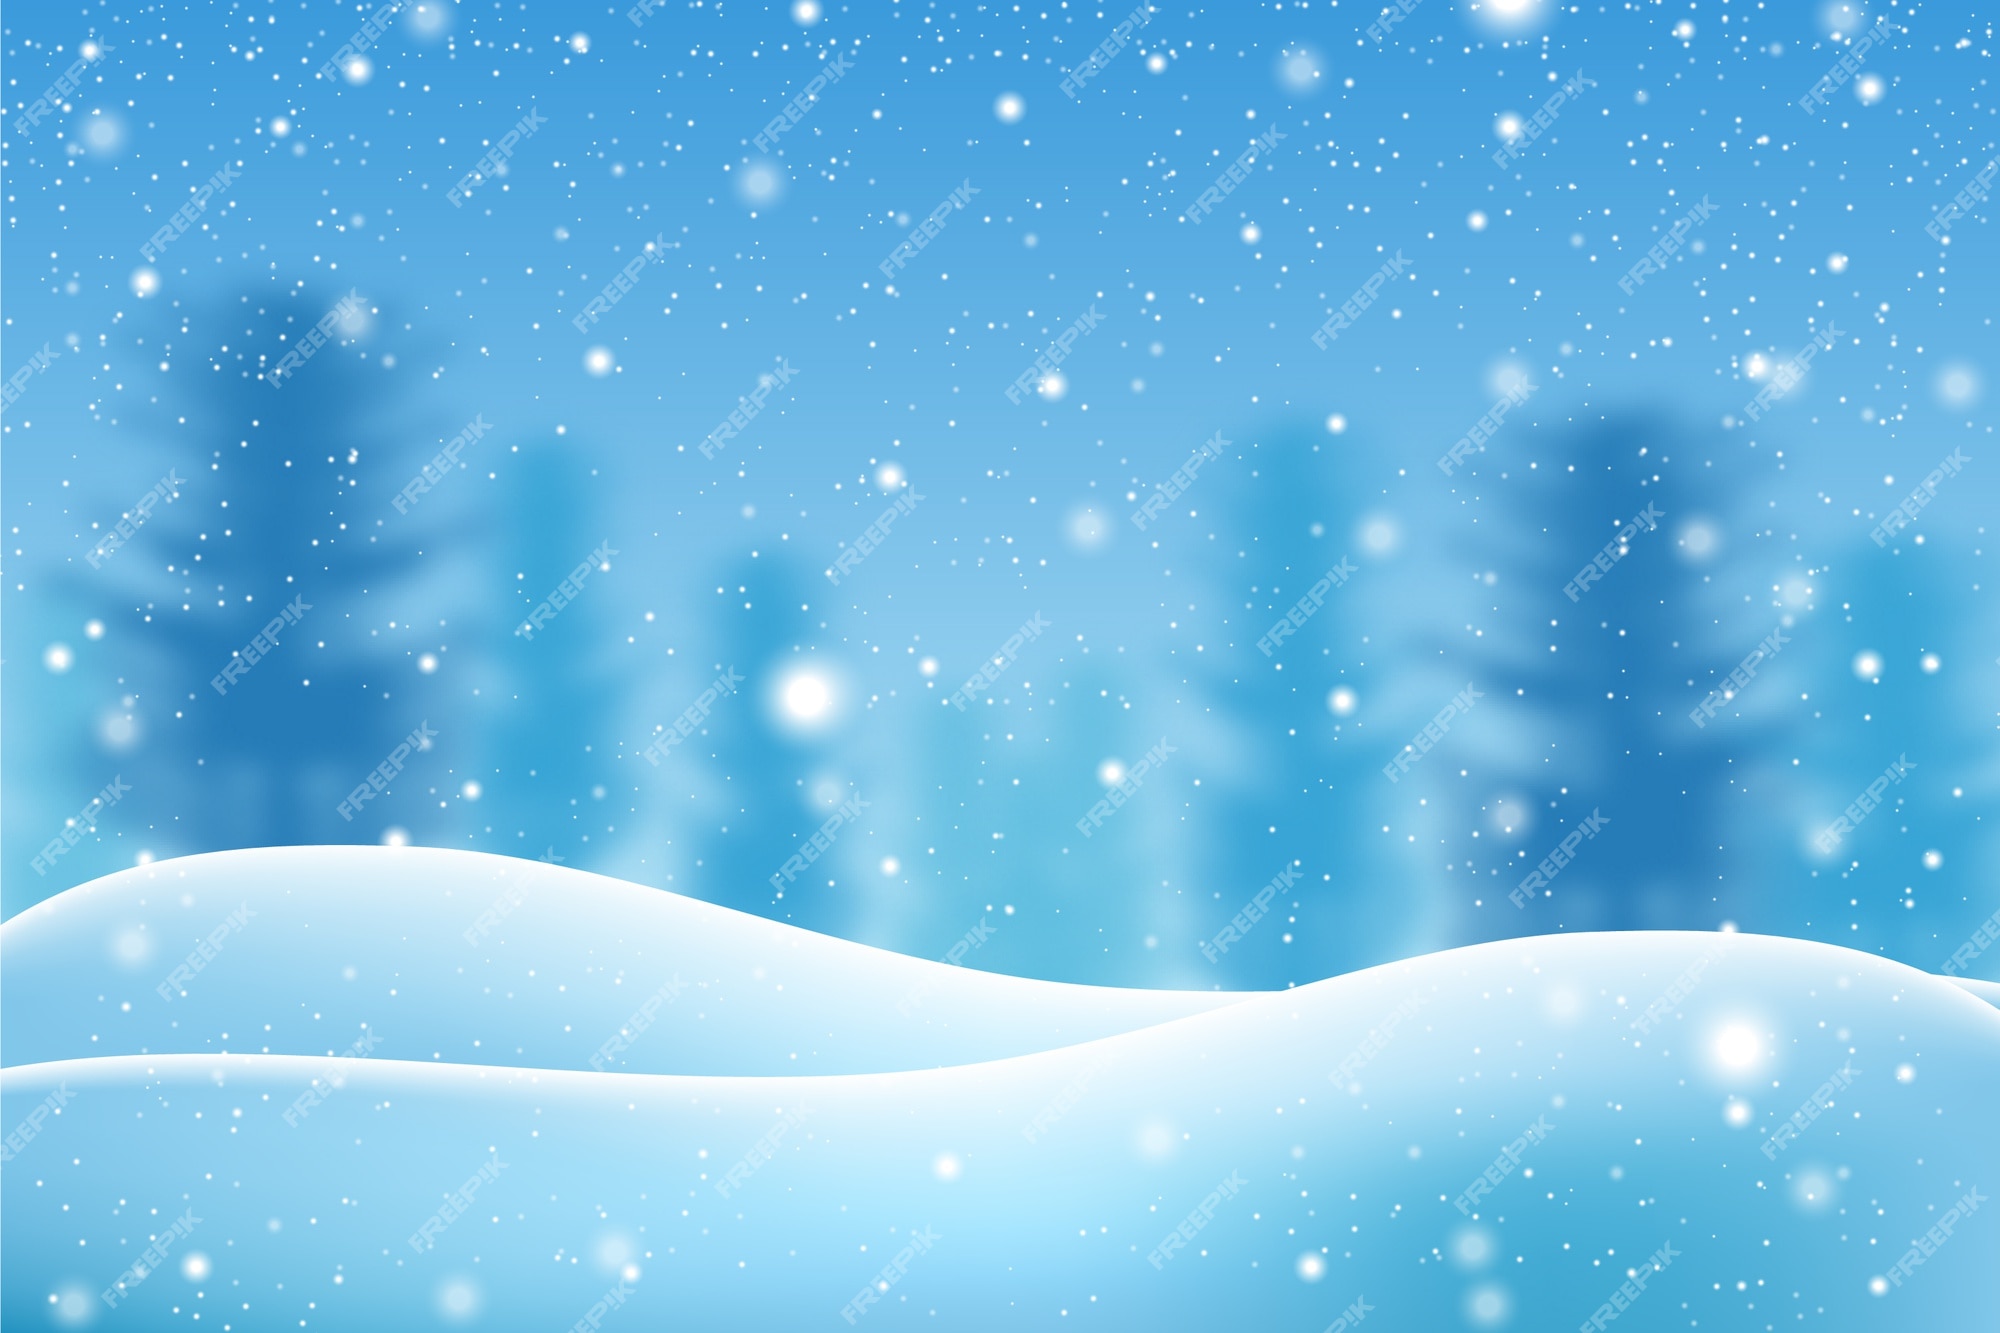 Winter Background Images - Free Download on Freepik